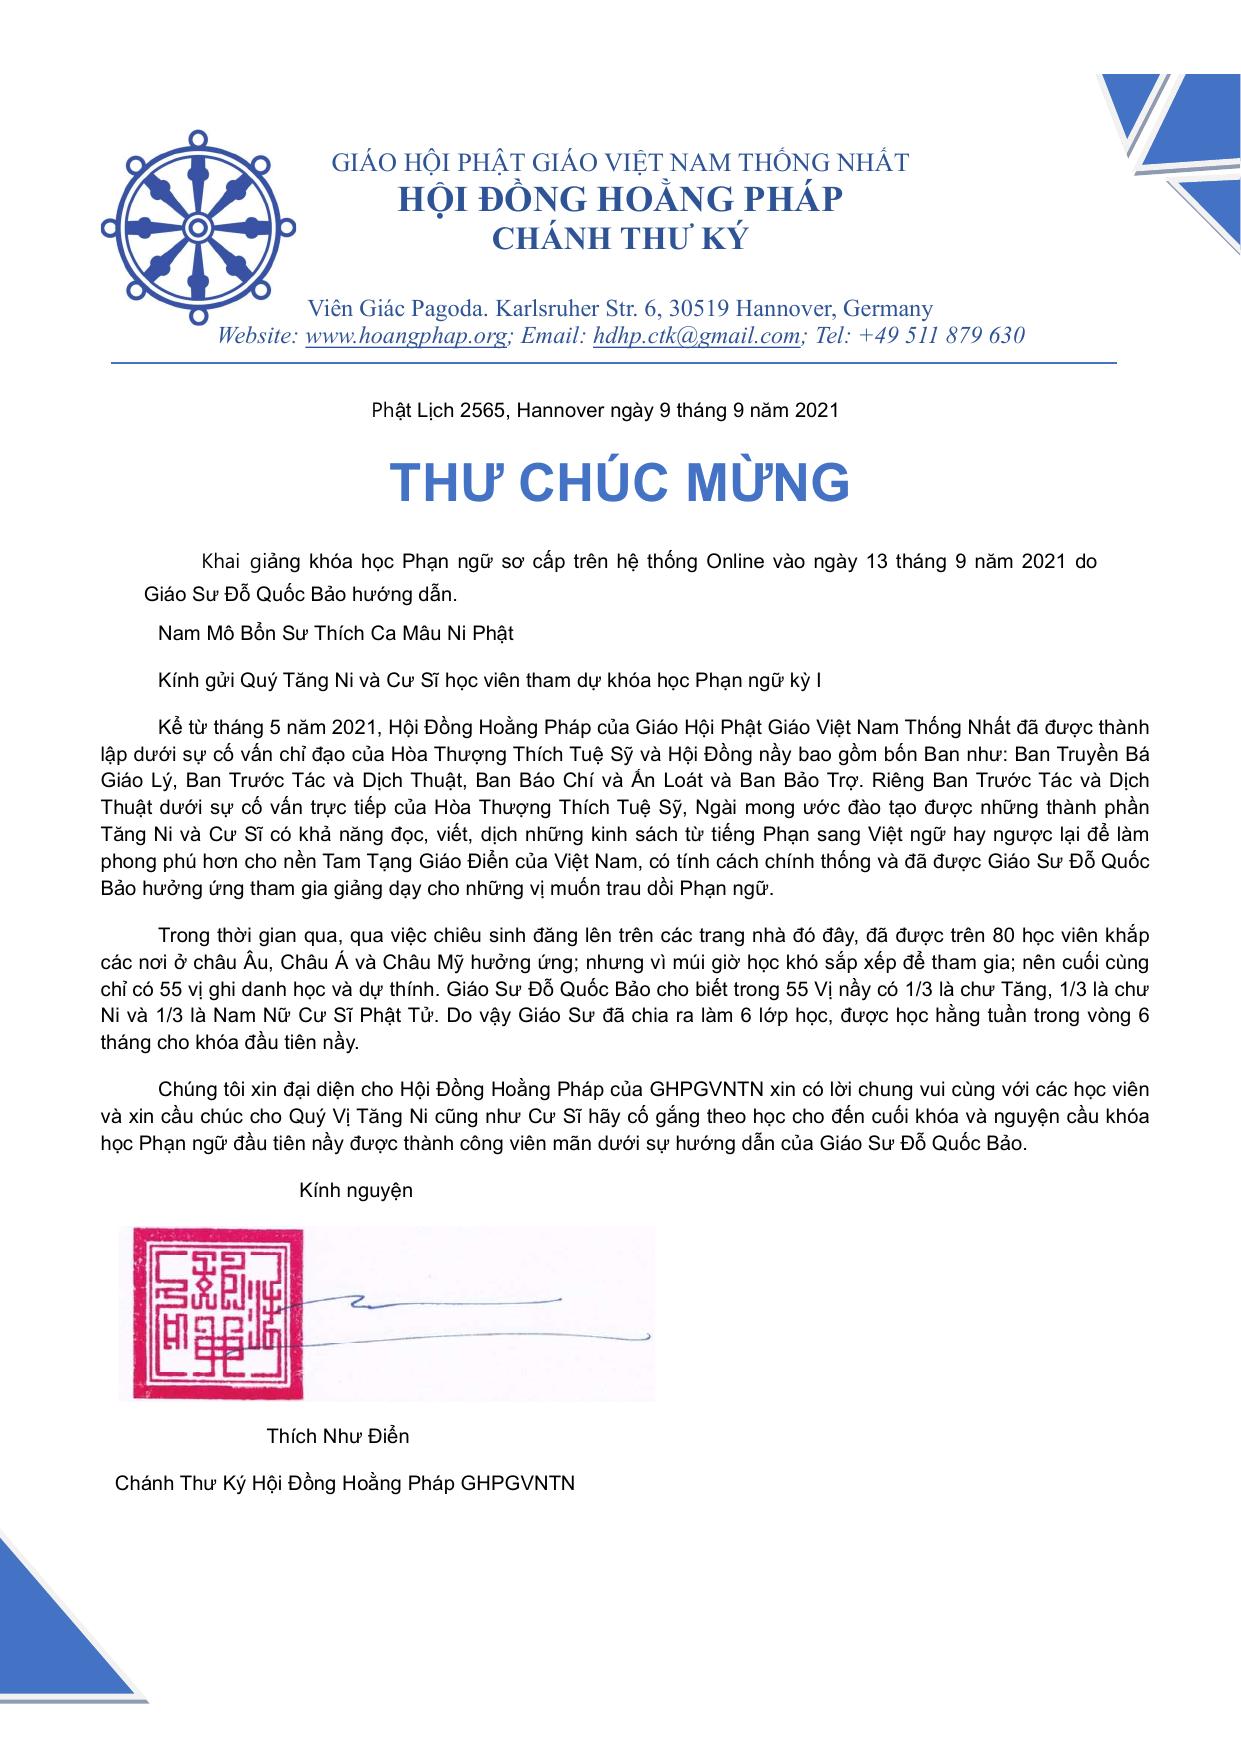 Thu-Chuc-Mung-1